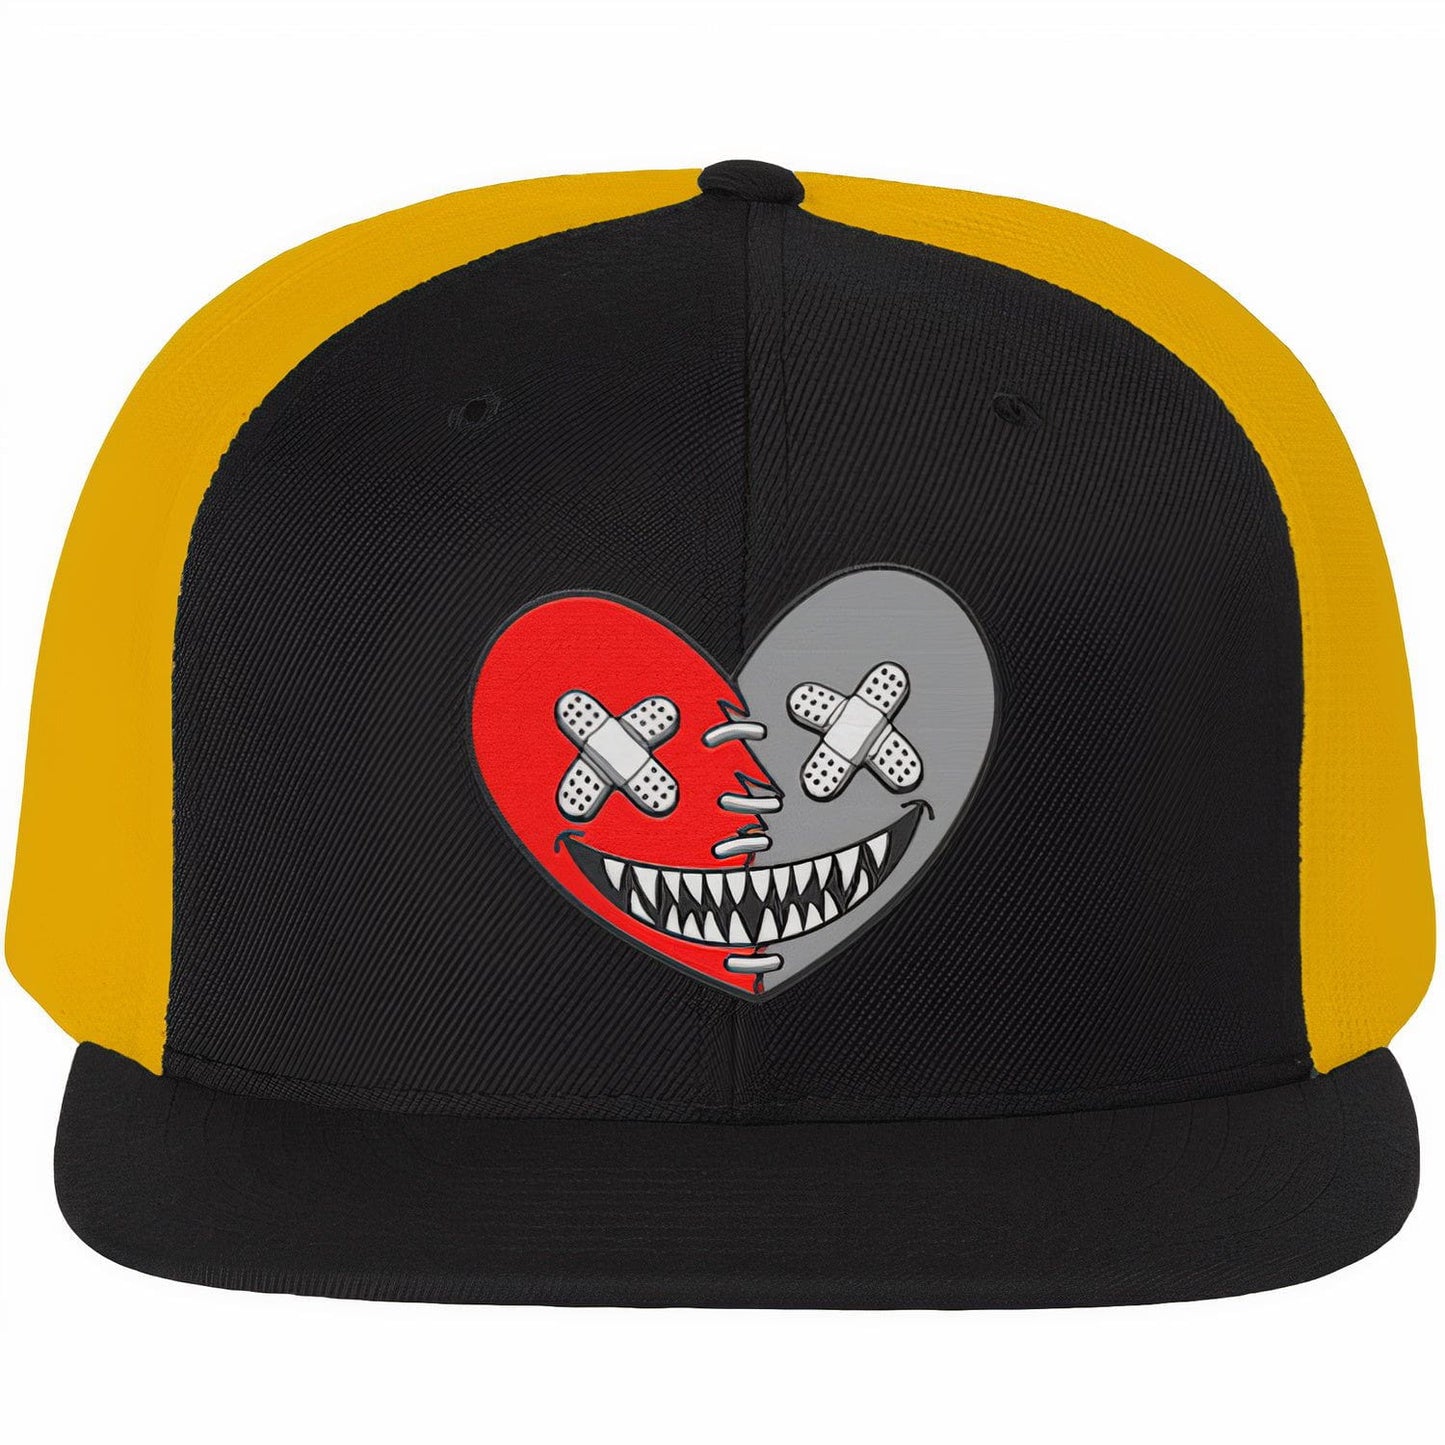 Yellow Ochre 6s Trucker Hat - Jordan 6 Ochre 6s Hats - Red Heart Baws